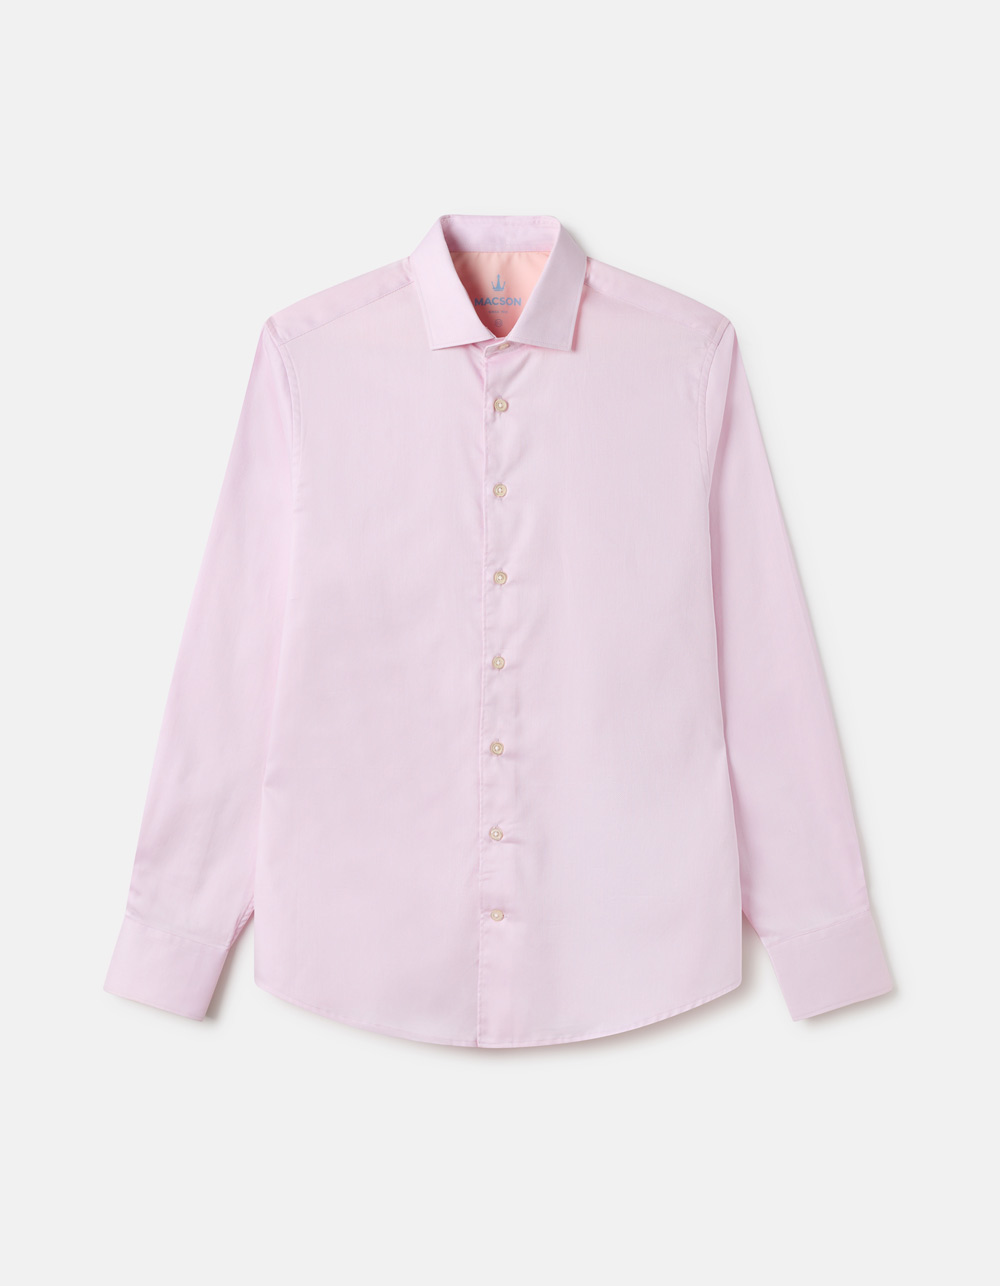 Camisa com microestrutura losango rosa